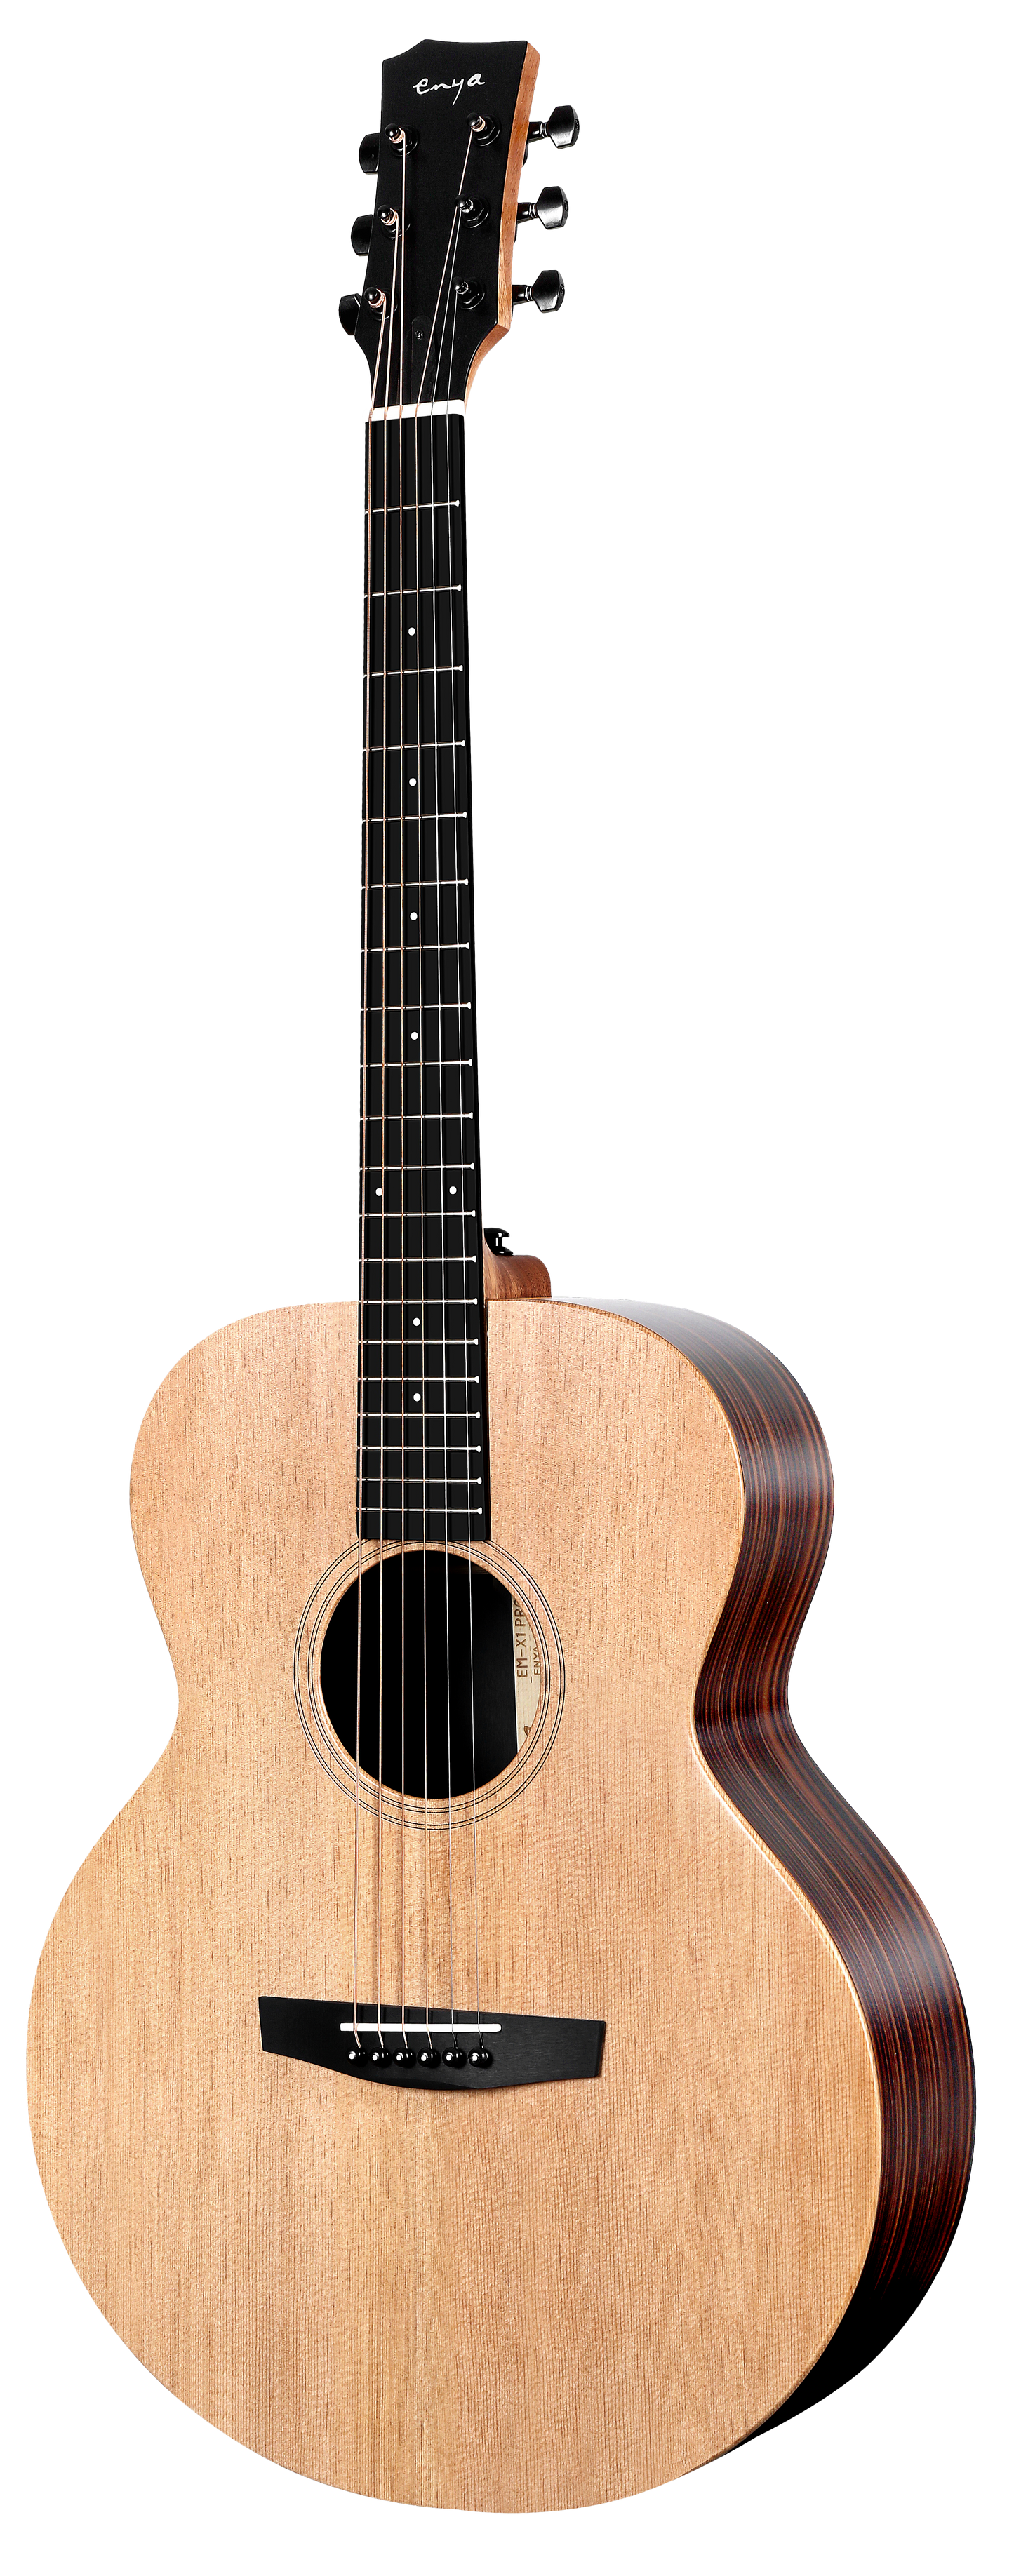 ENYA EM-X1 PRO EQ Acoustic Guitar